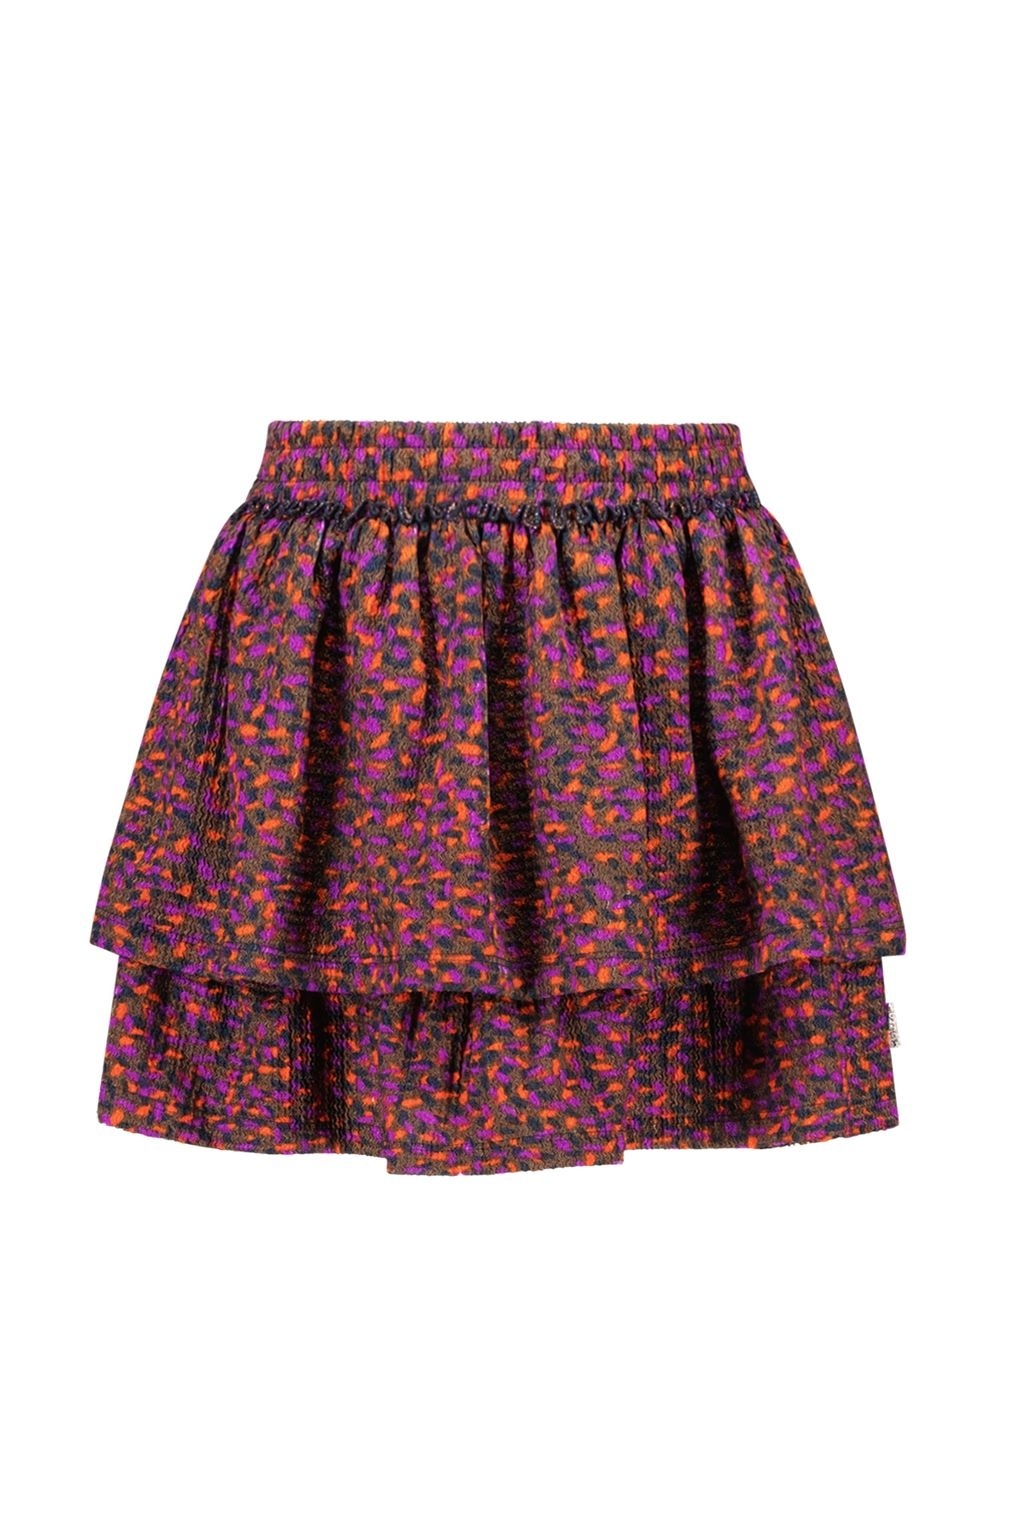 B.Nosy Girls Kids Skirts Y308-5720 maat 104